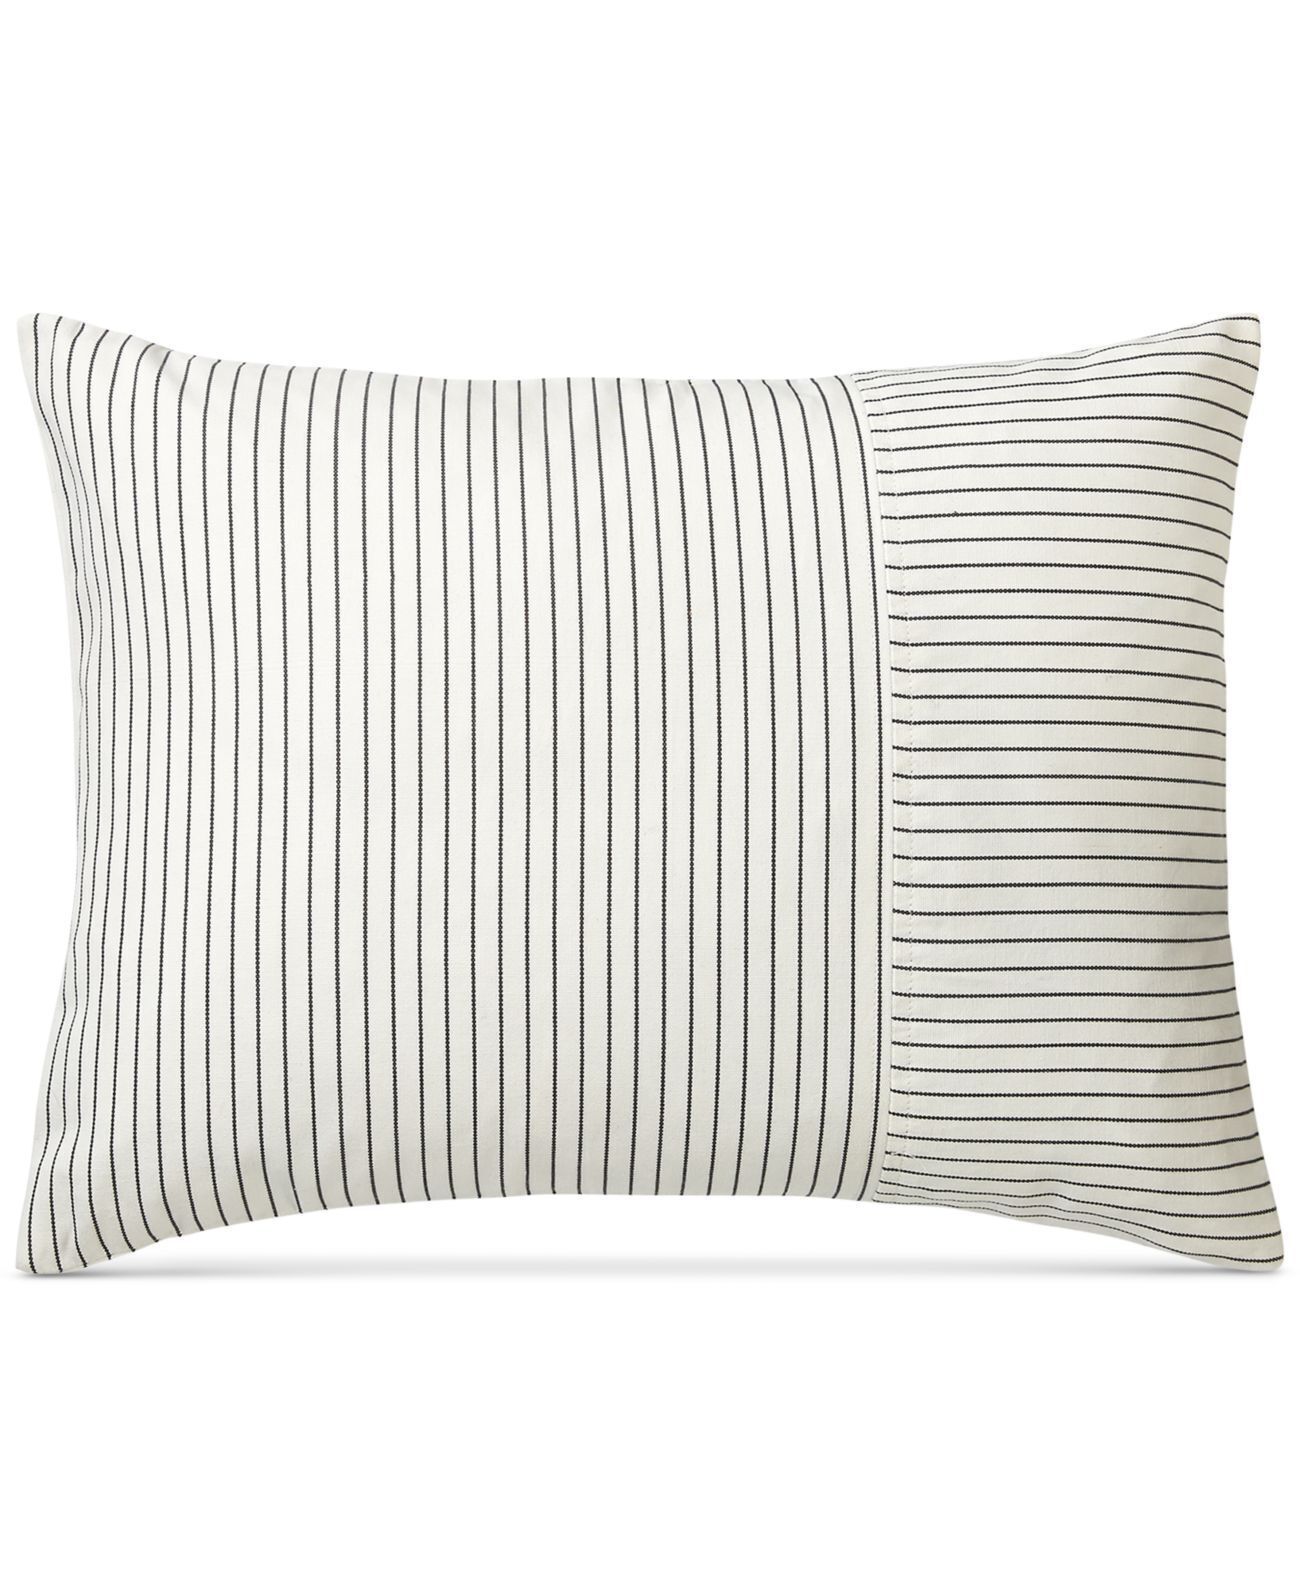 Primary image for LAUREN RALPH LAUREN Devon Ticking Stripe Decorative Pillow 15X20